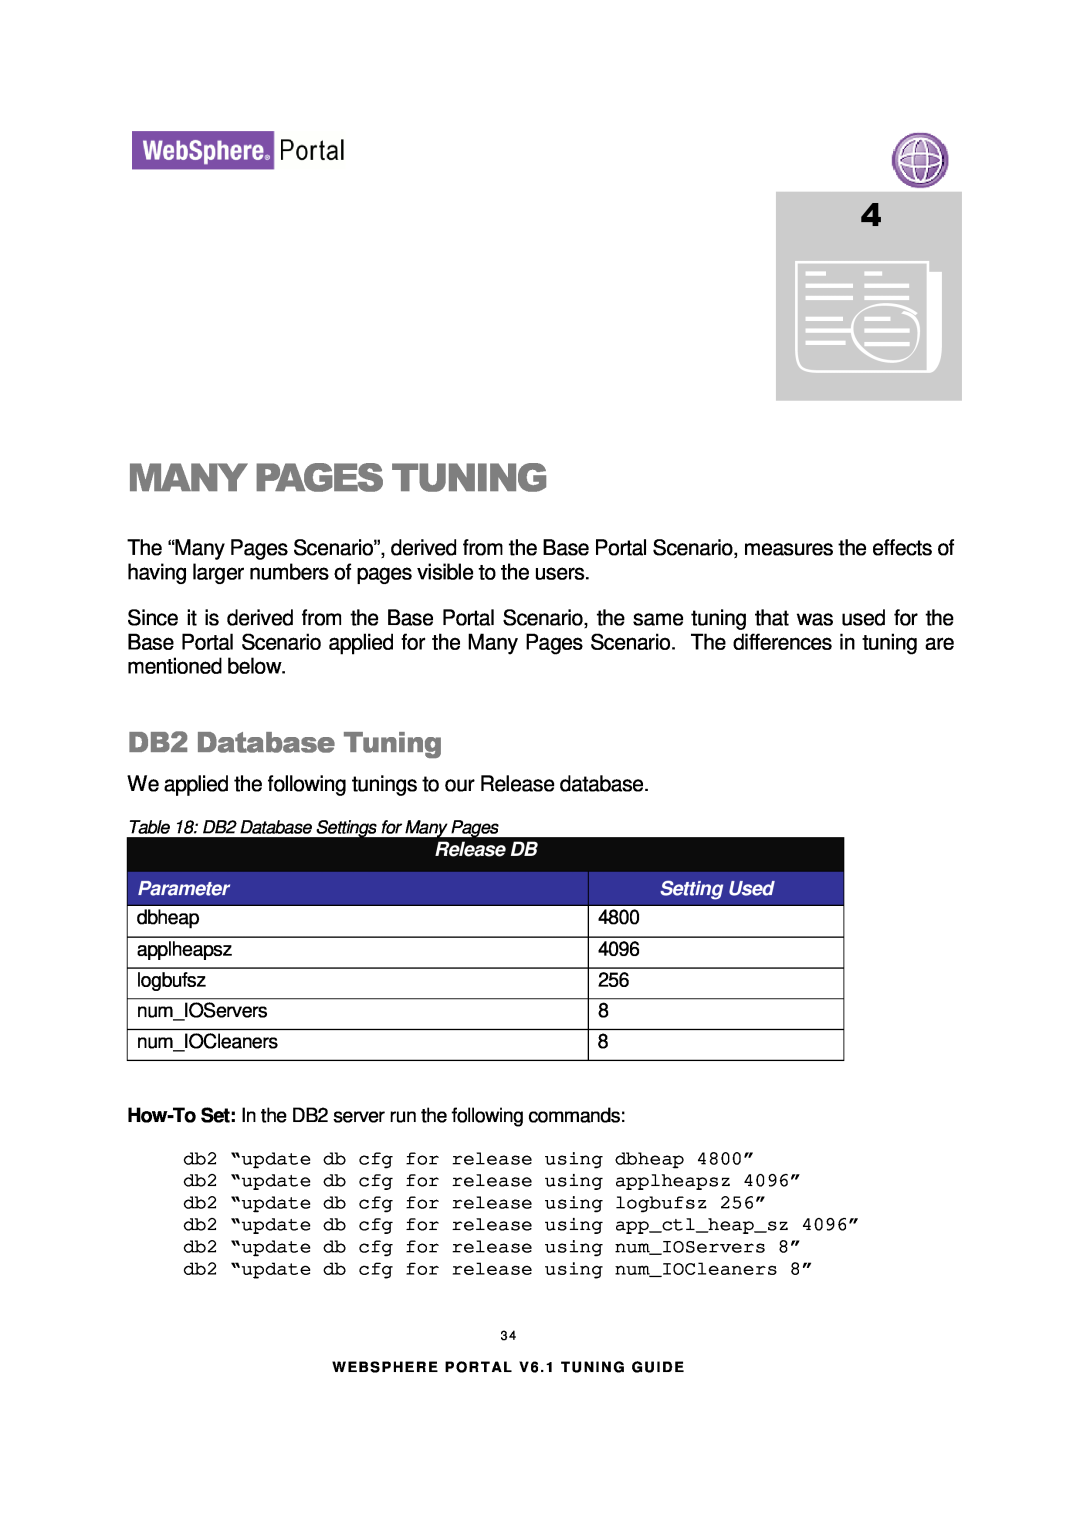 IBM 6.1.X manual Many Pages Tuning, DB2 Database Tuning 